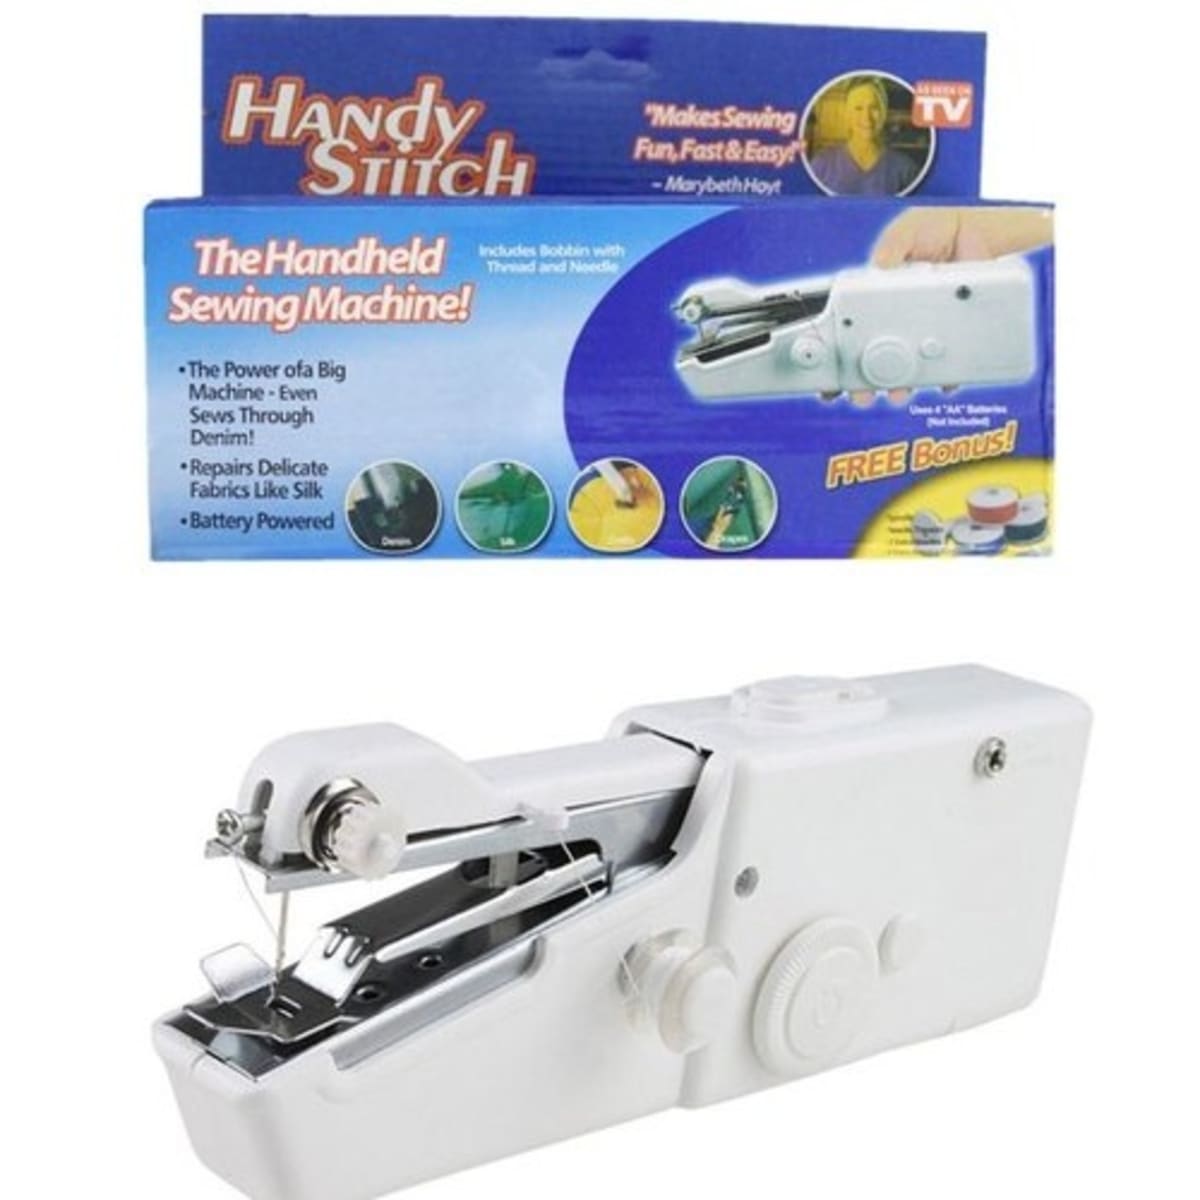 Handy Stitch, Other, New Handy Stitch The Handheld Sewing Machine